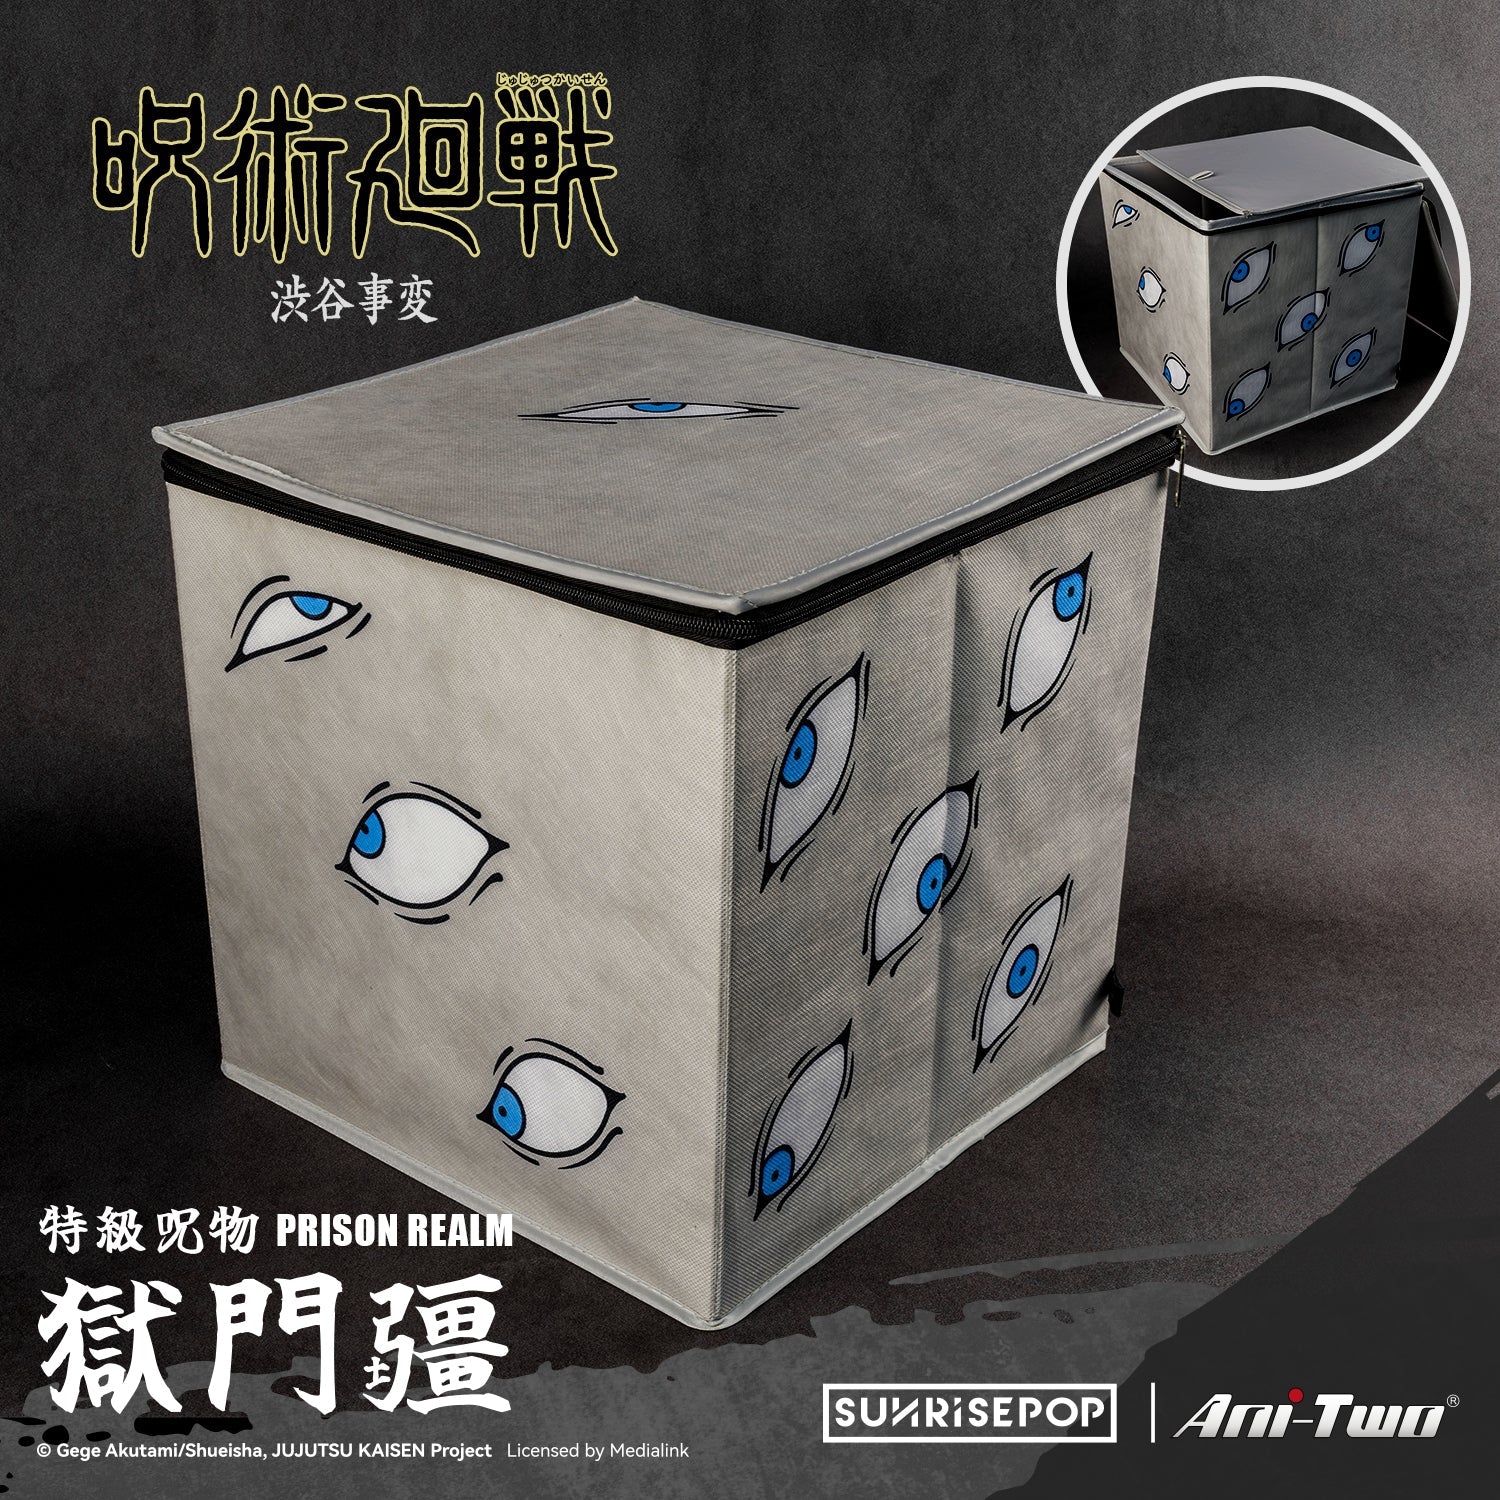 Jujutsu Kaisen 2 Prison Realm Storage Box